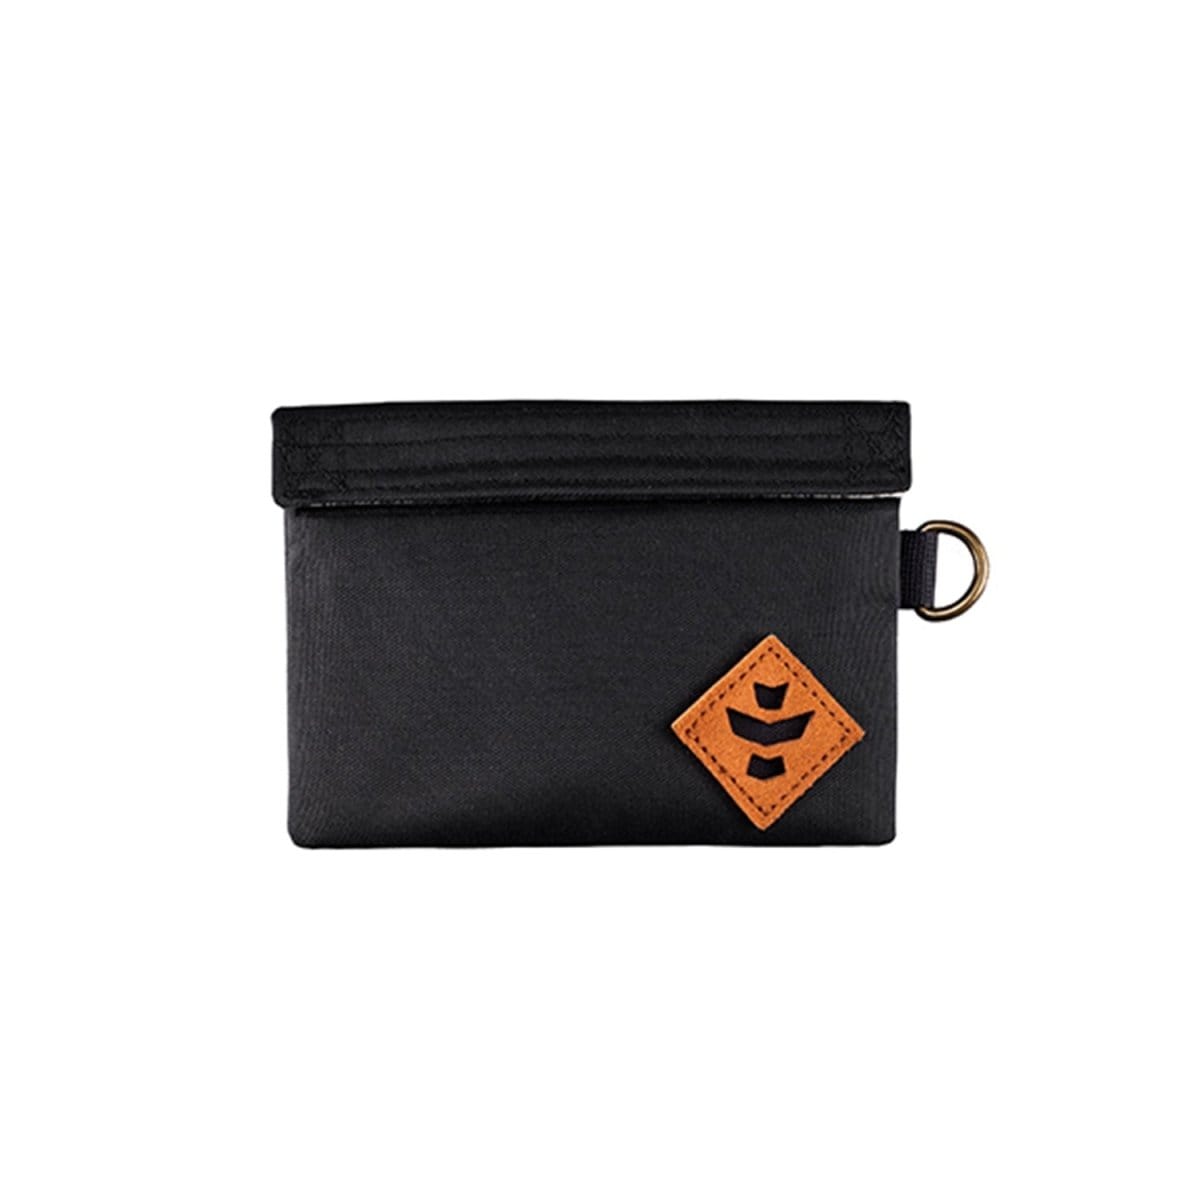 Revelry Supply Travel Bag Black The Mini Confidant - Smell Proof Small Stash Bag